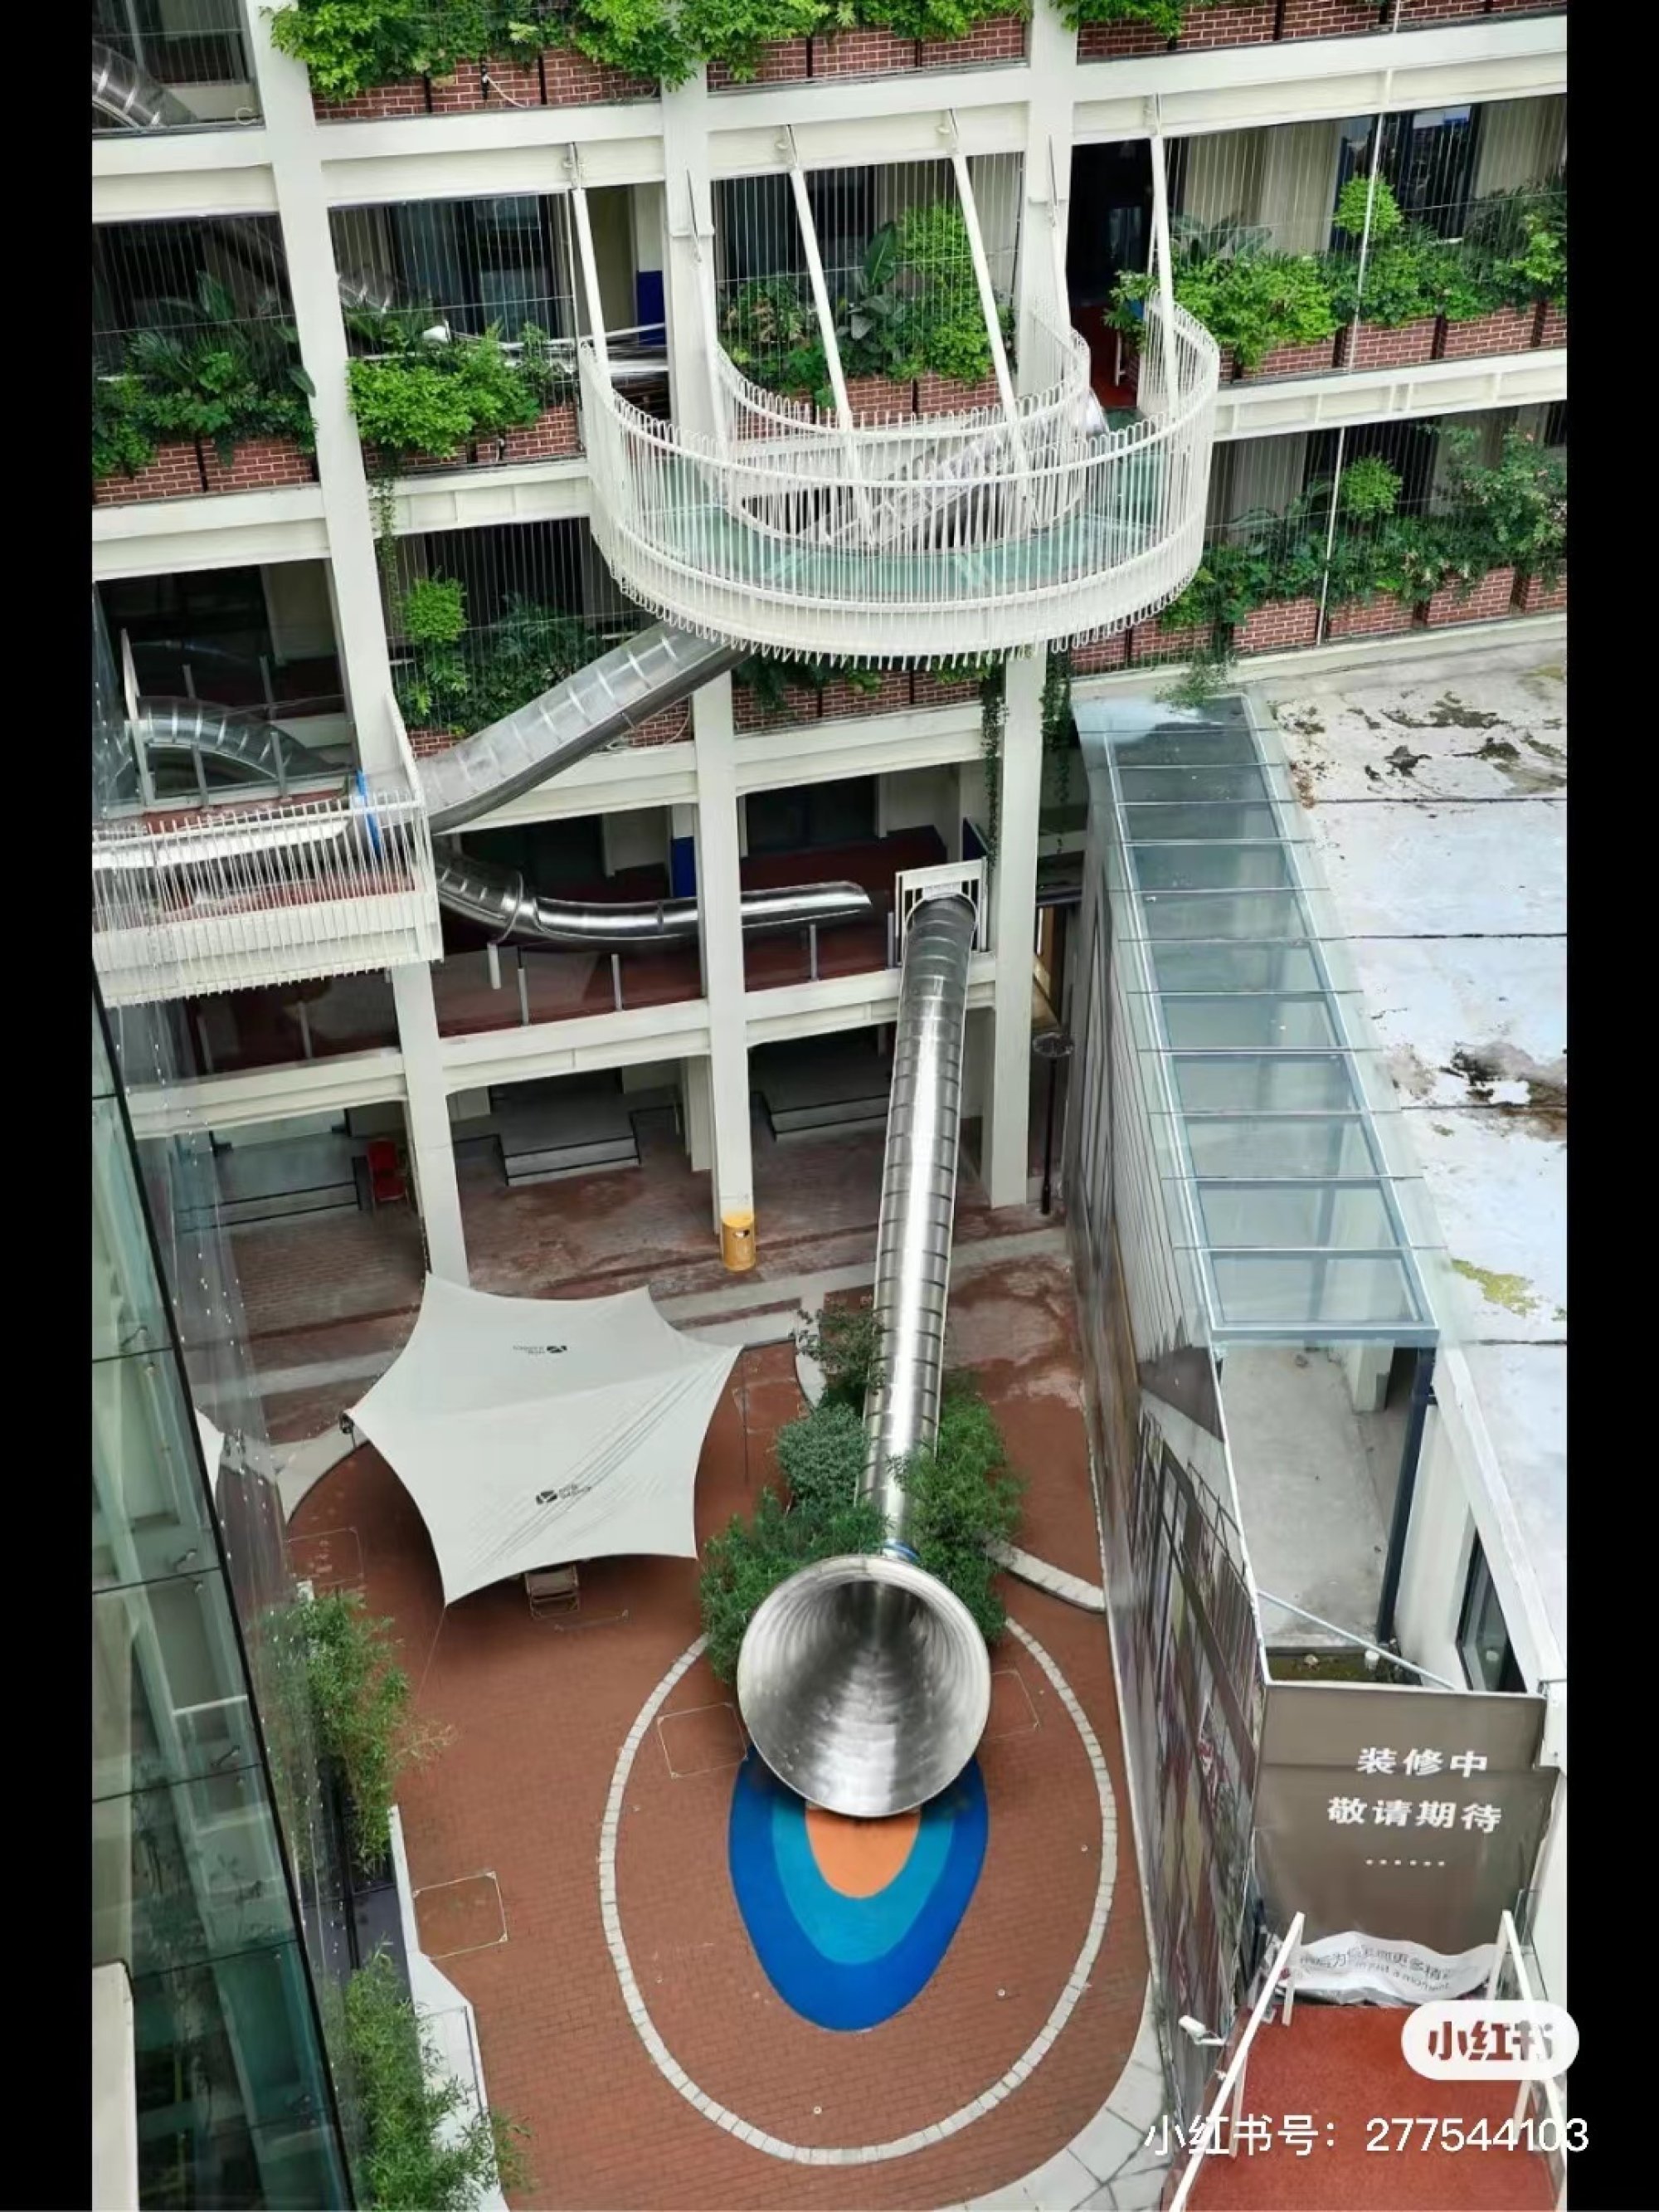 A bird’s-eye view of one of the slide exits. Photo: Xiaohongshu